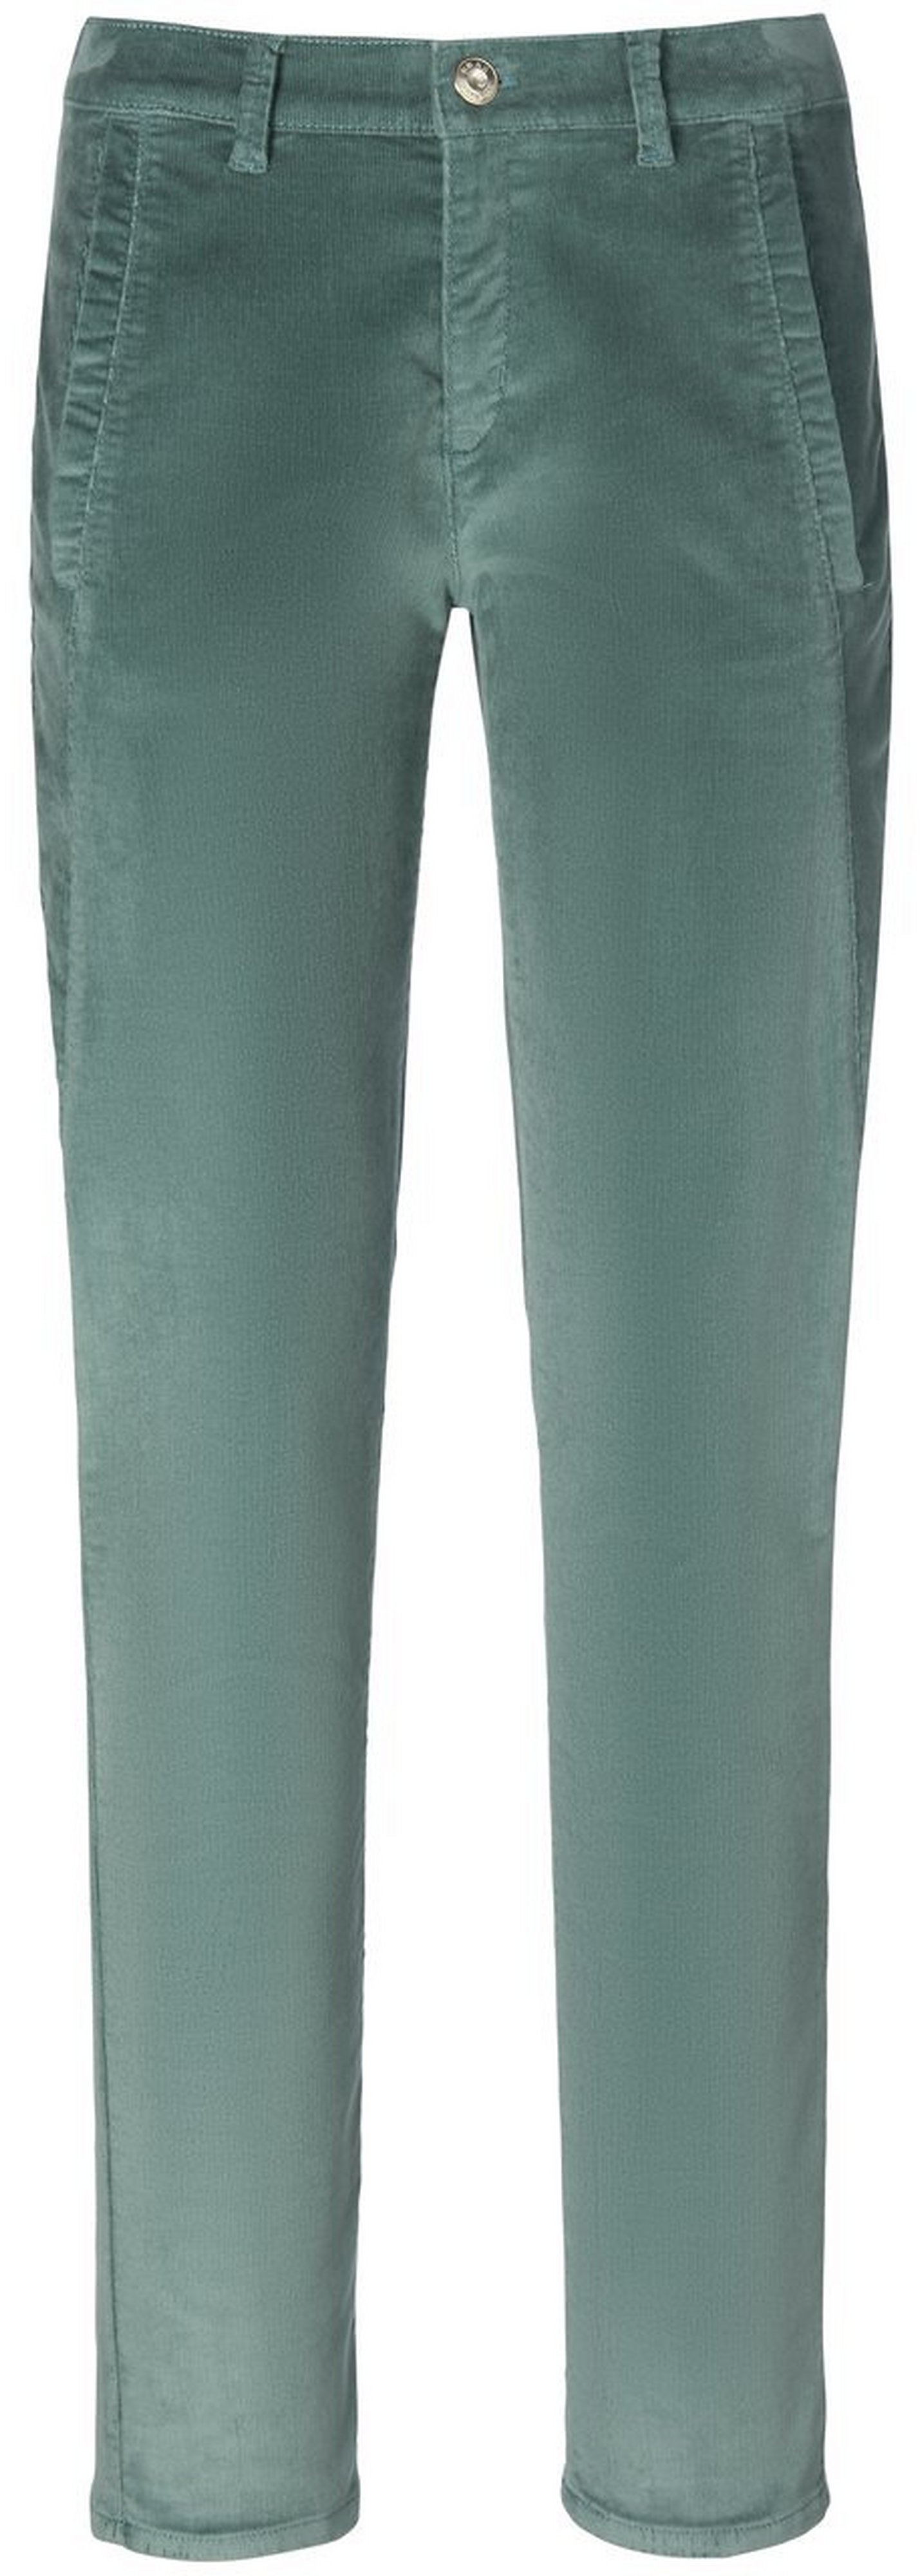 Le pantalon en velours milleraies Relaxed Fit  Brax Feel Good vert